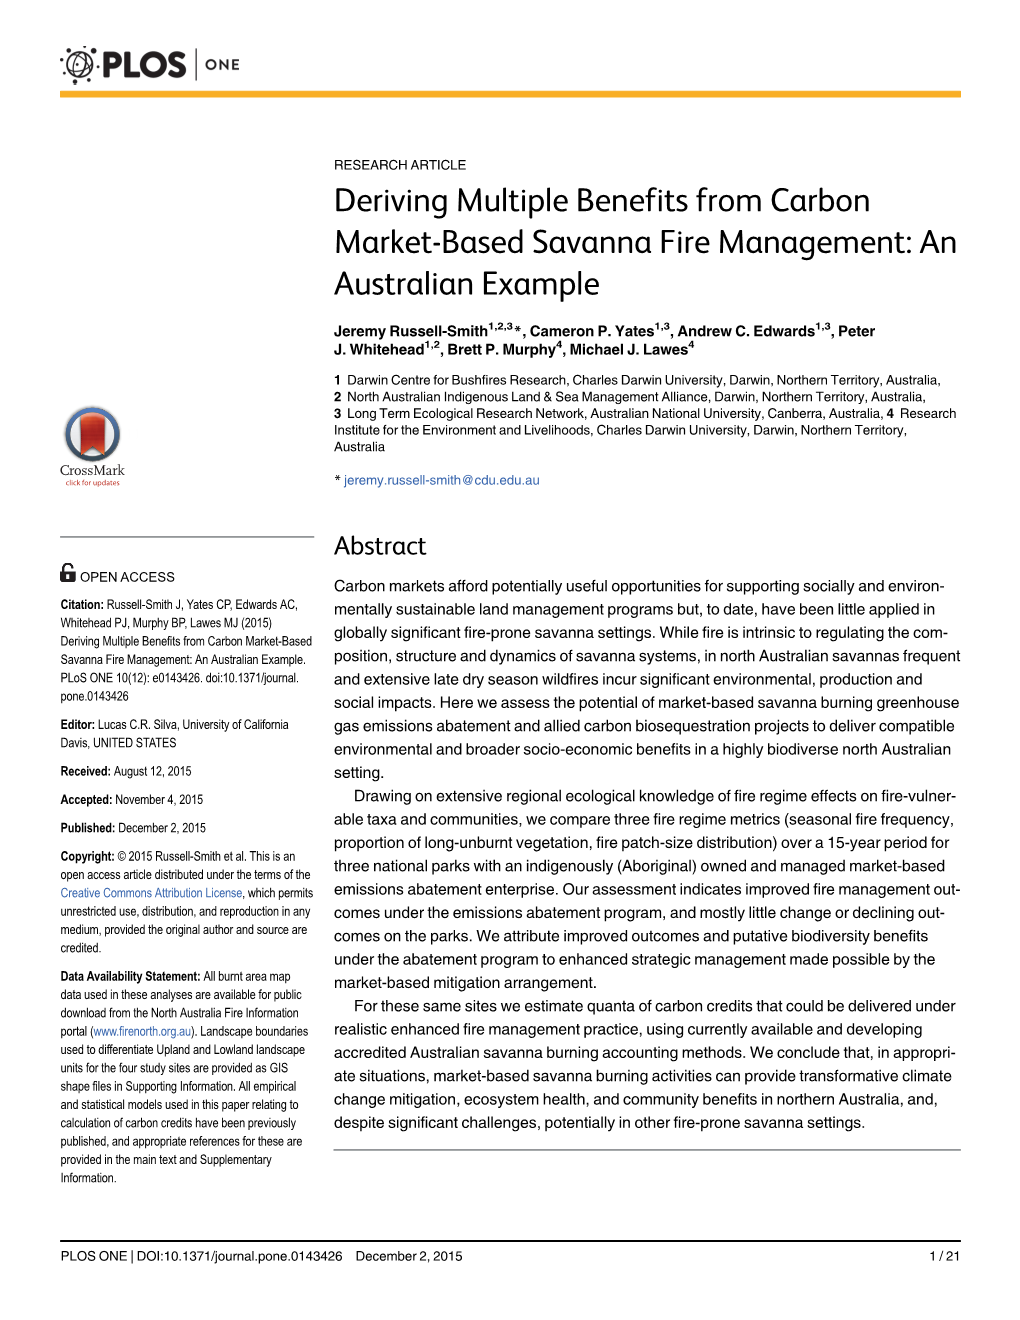 Deriving Multiple Benefits from Carbon Market-Based Savanna Fire Management: an Australian Example